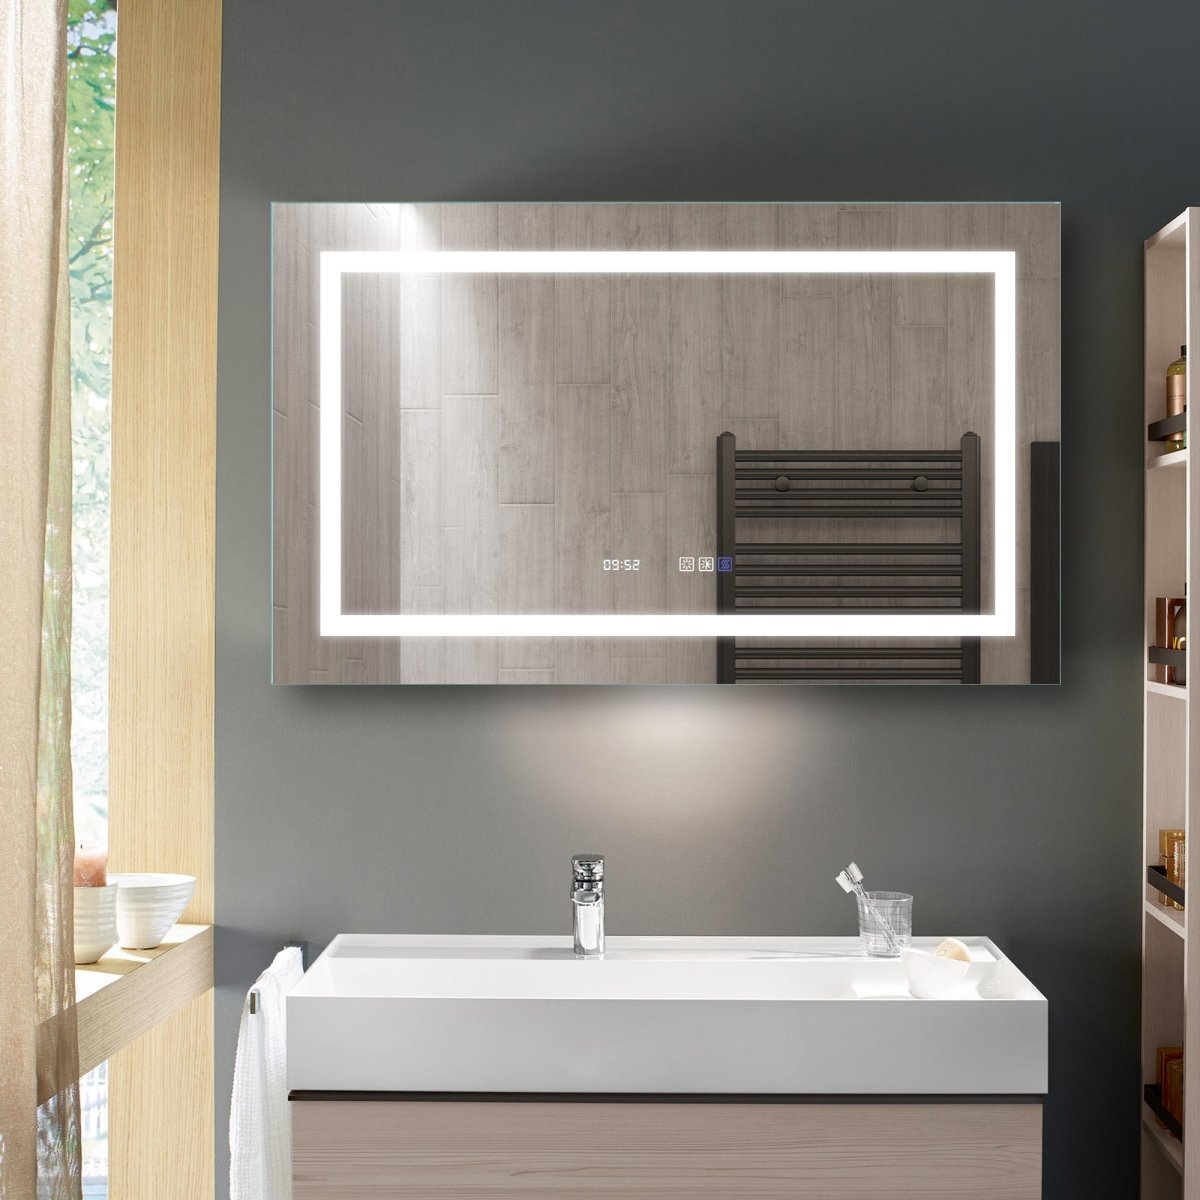 Ascend-M2 40" W x 24" H Bathroom Led Light Mirror Anti Fog with Digital Clock Lighted Vanity Mirror